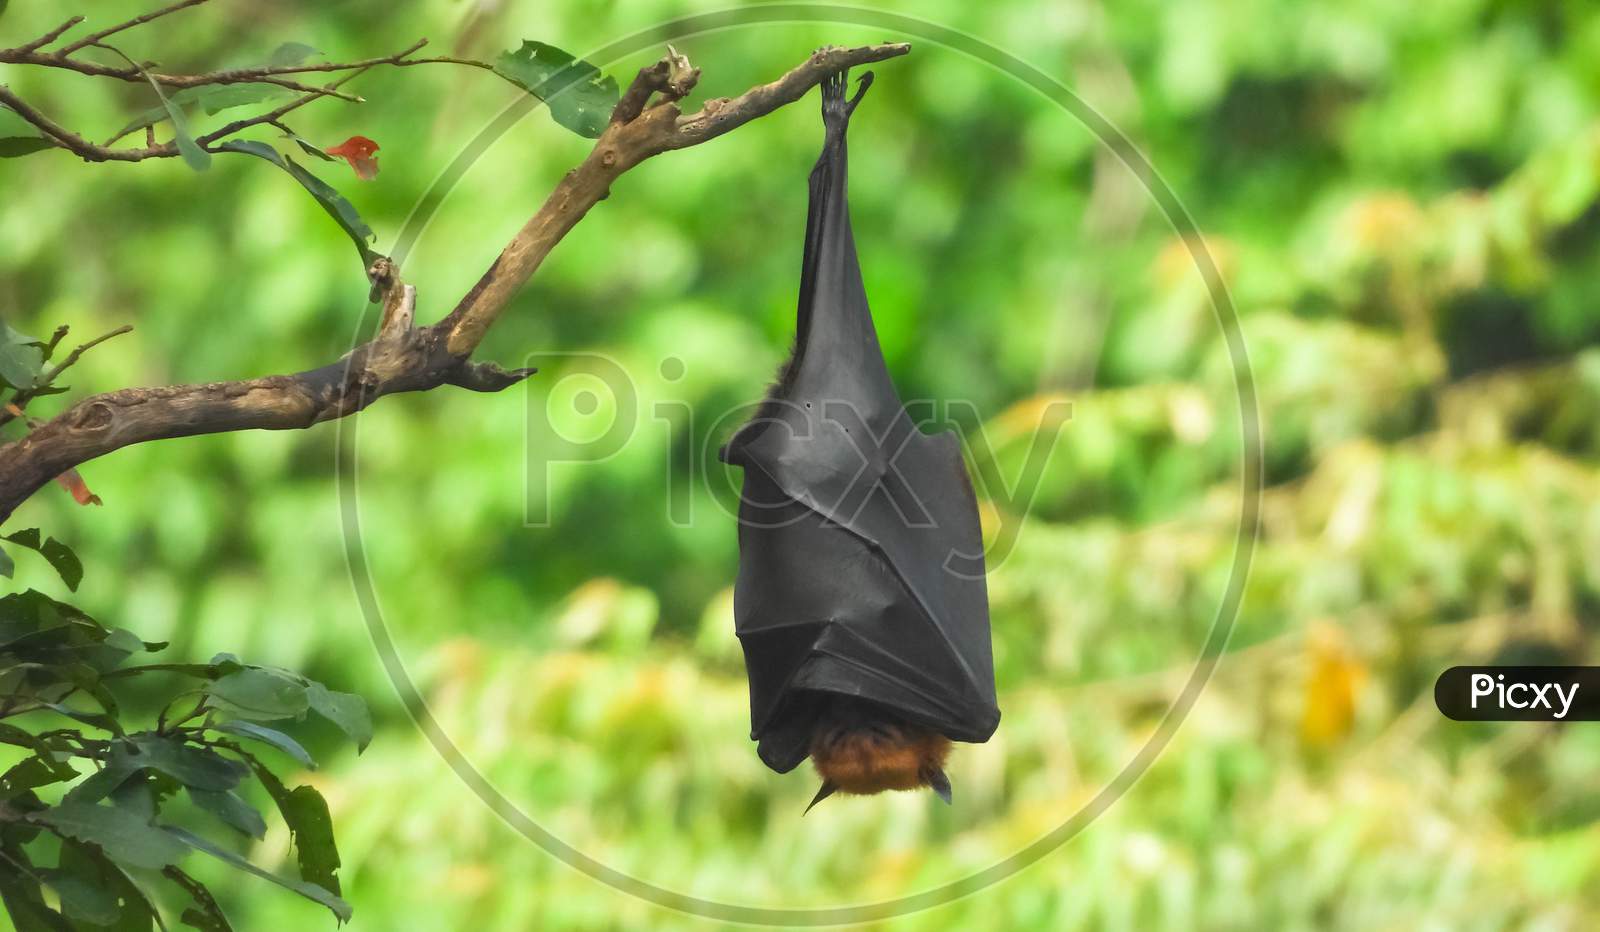 Bat is tied and sleeping.